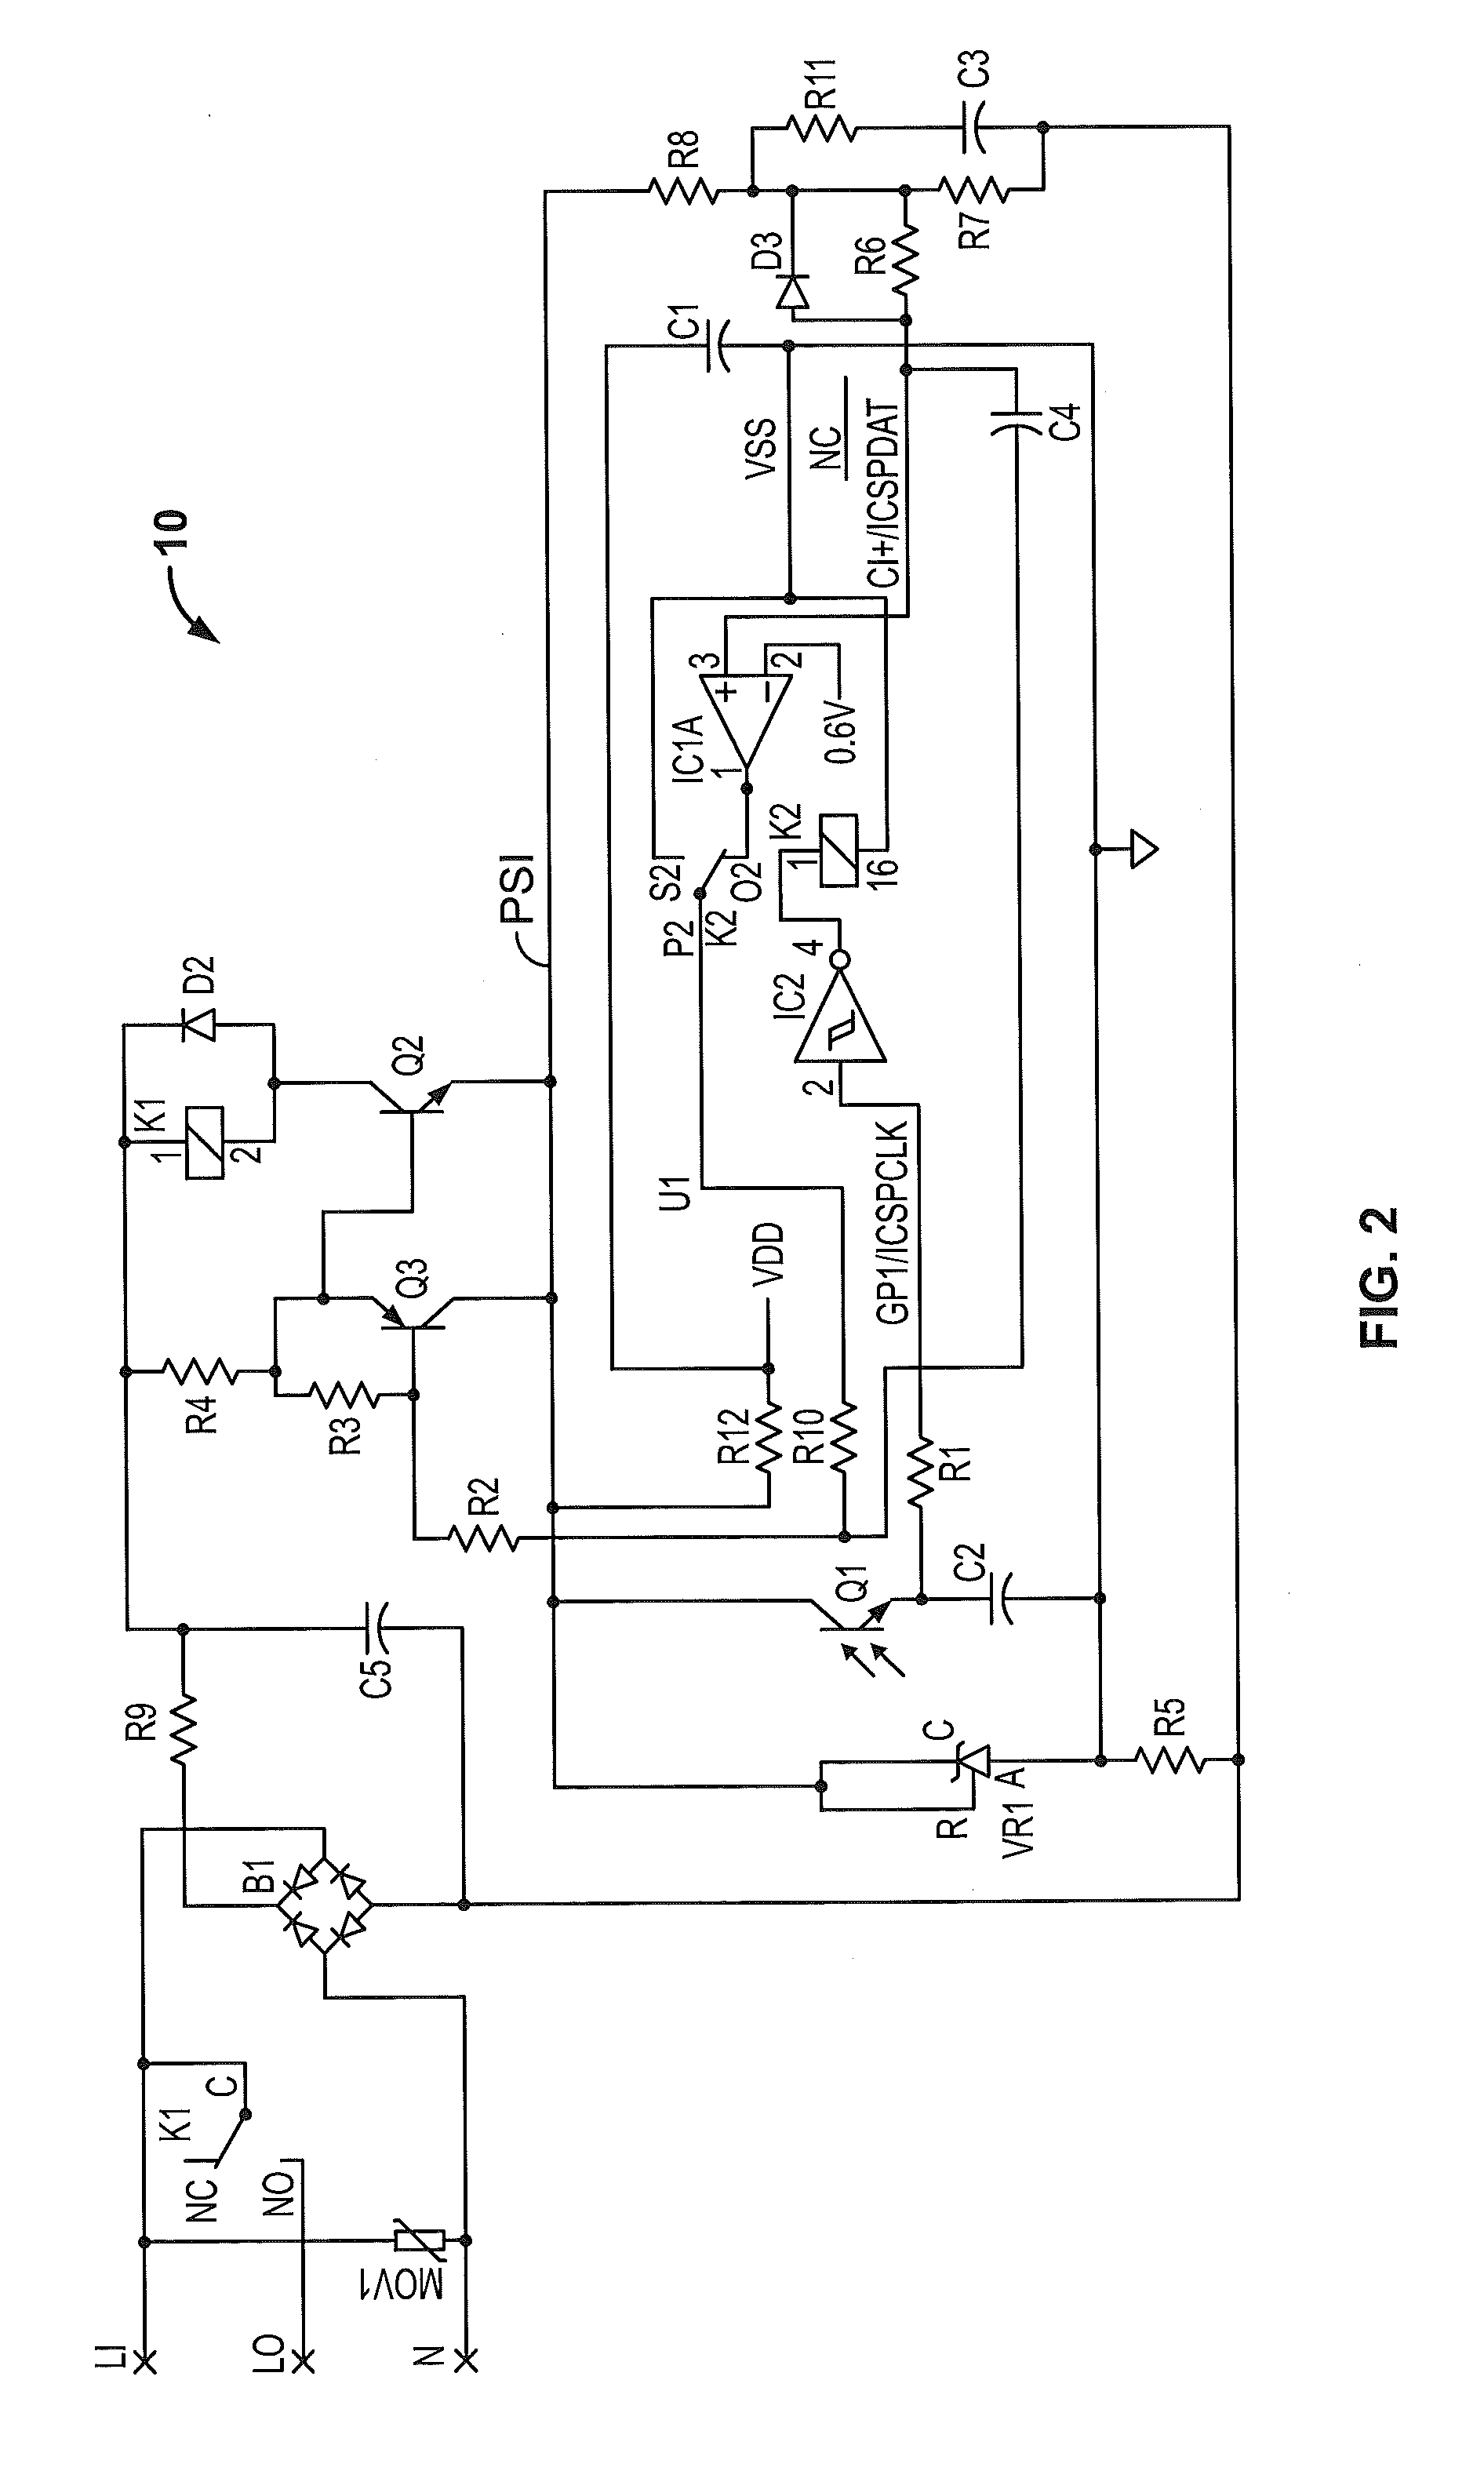 Photosensor circuits including a regulated power supply